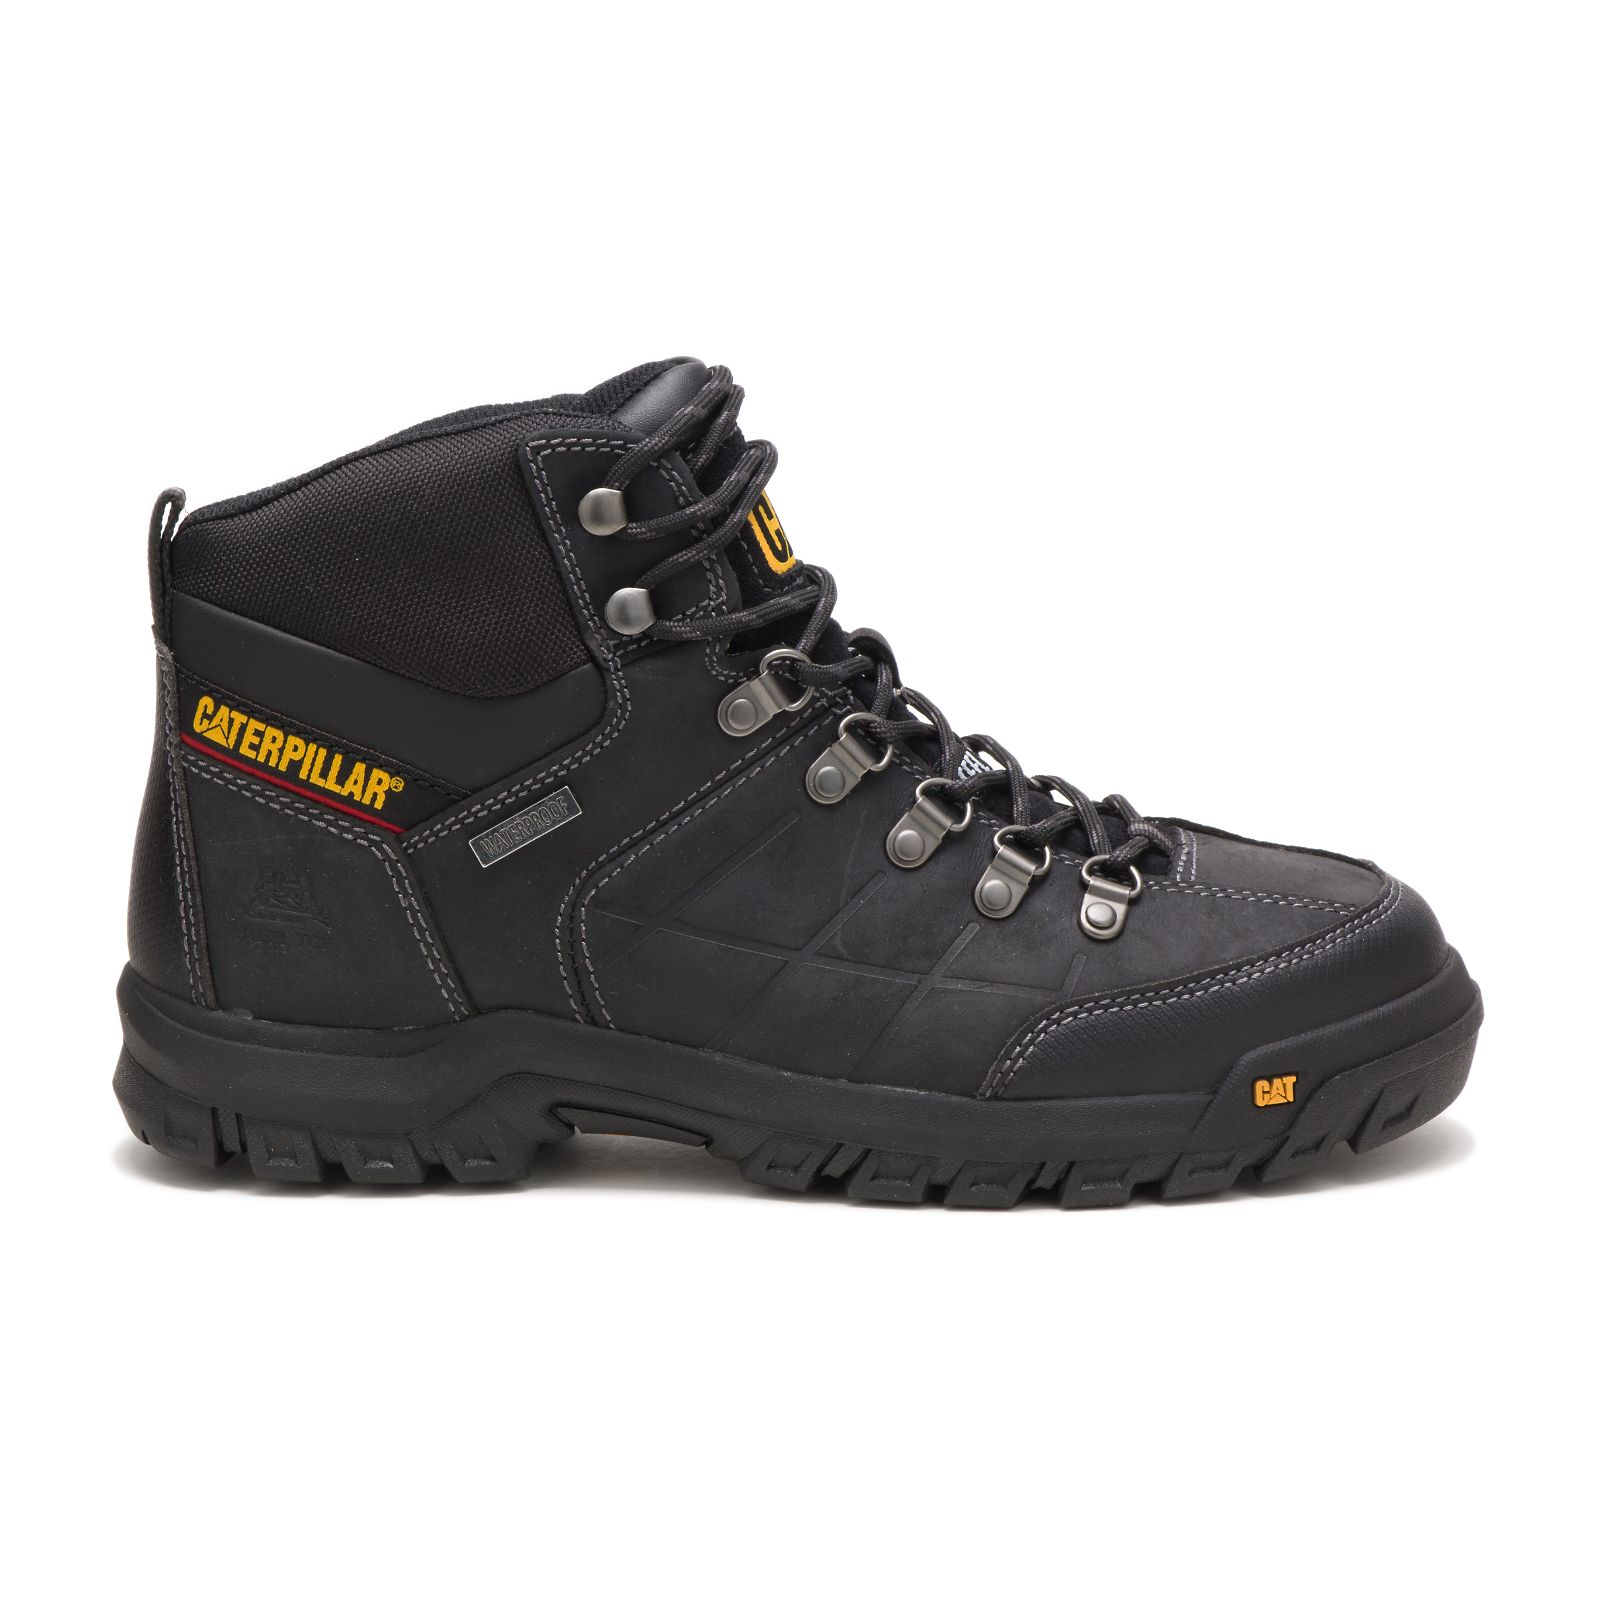 Caterpillar Boots Online - Caterpillar Threshold Waterproof Steel Toe Mens Work Boots Black (319527-MUB)